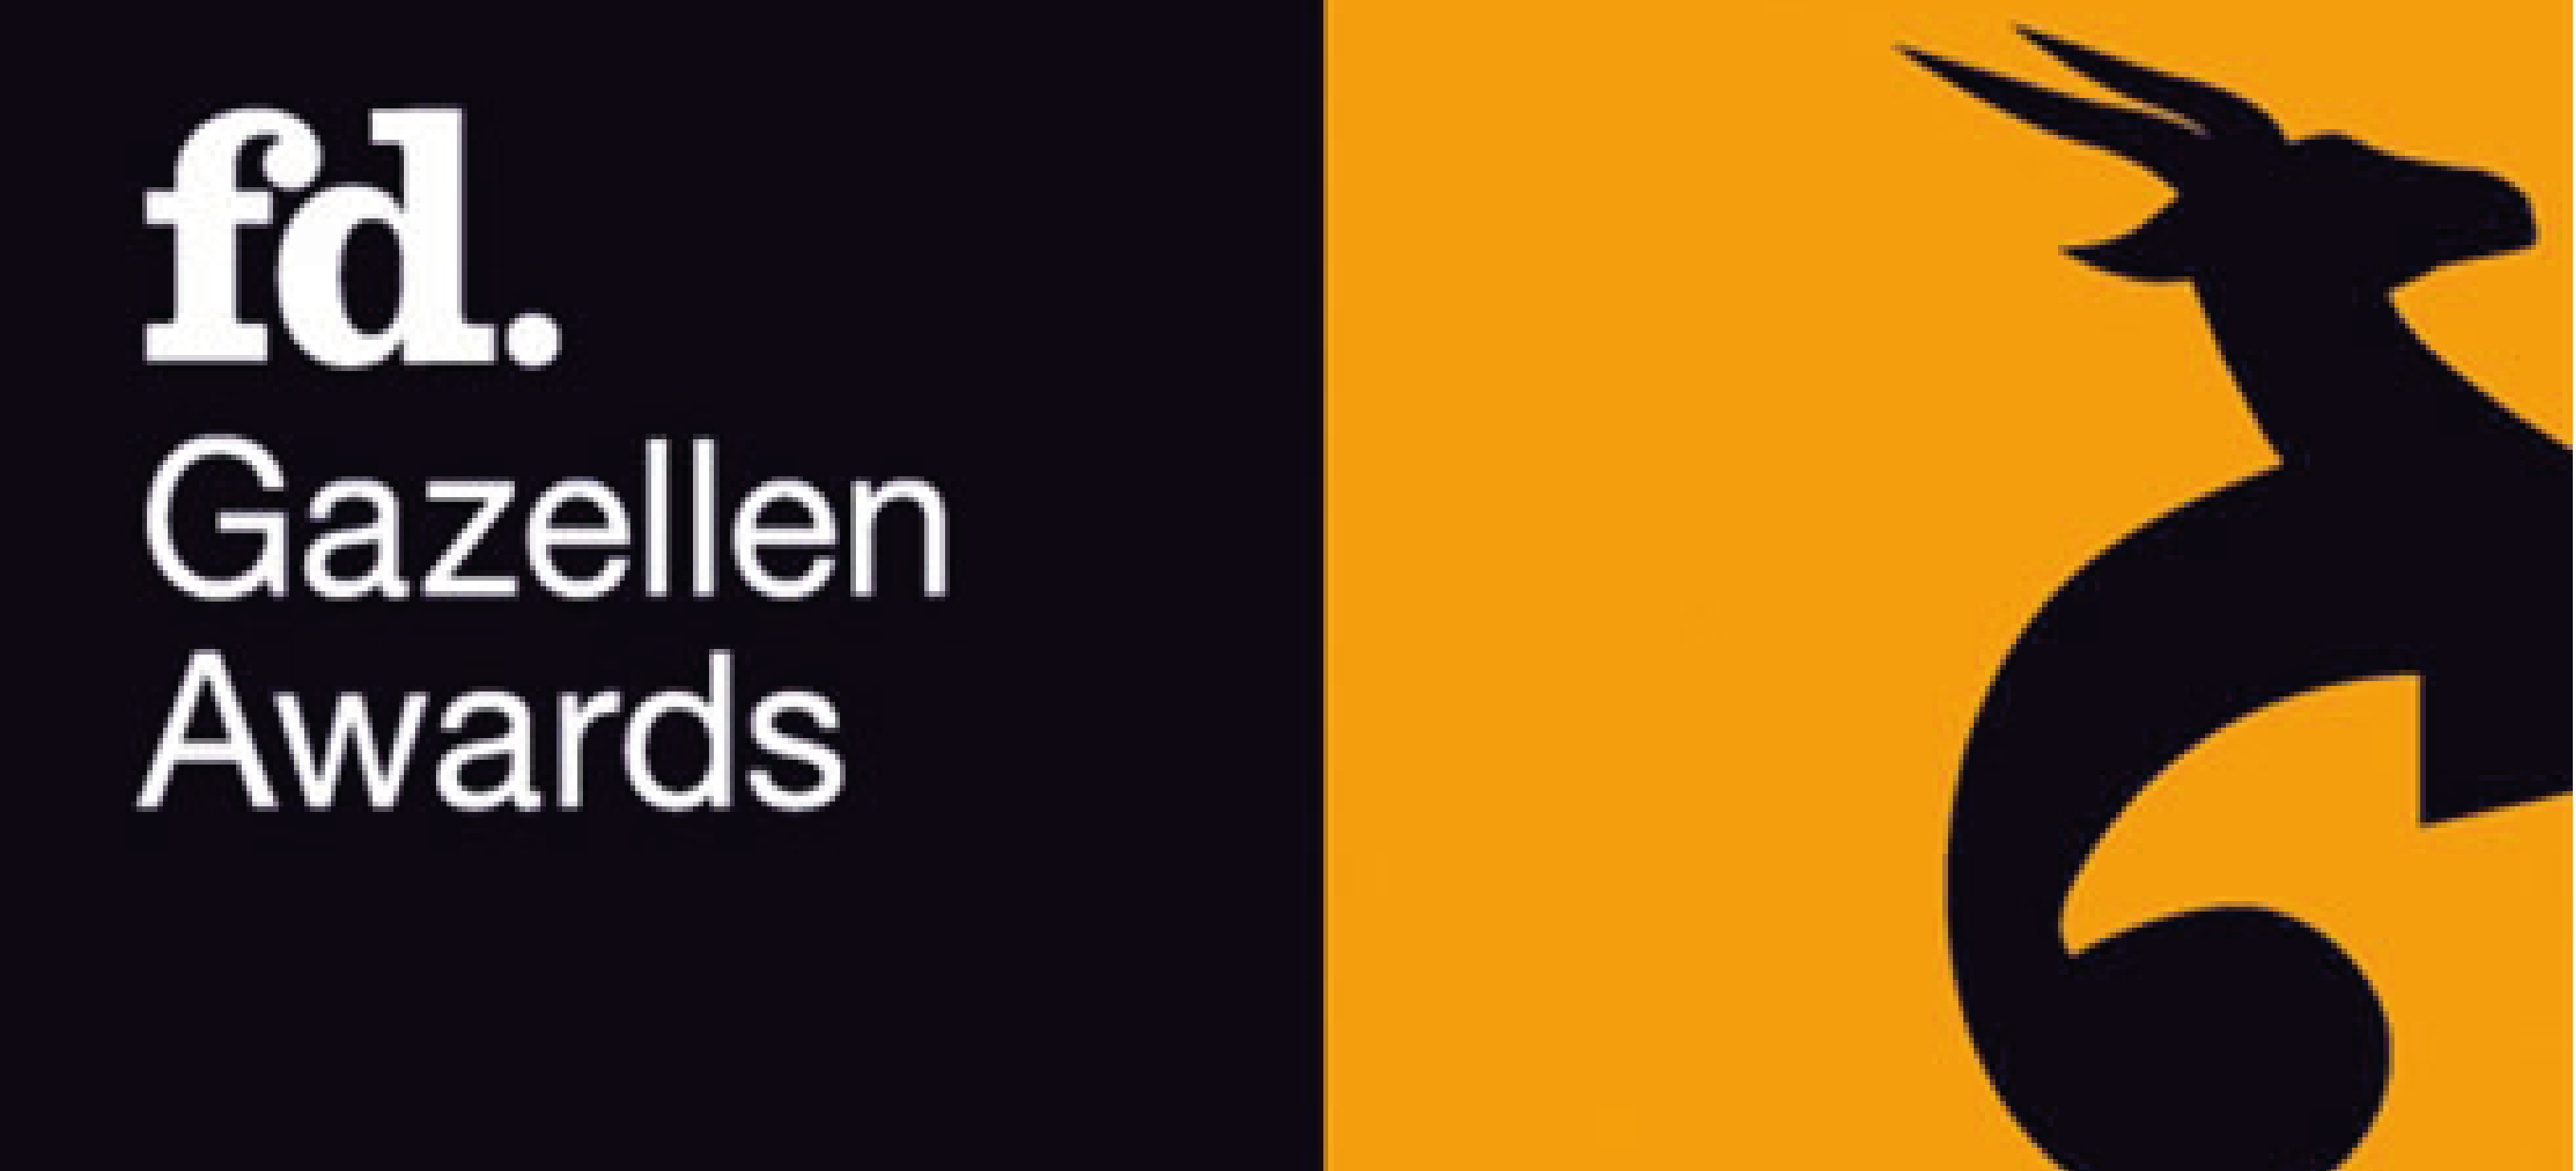 Jan Zandbergen Group - logo FD. Gazellen Awards